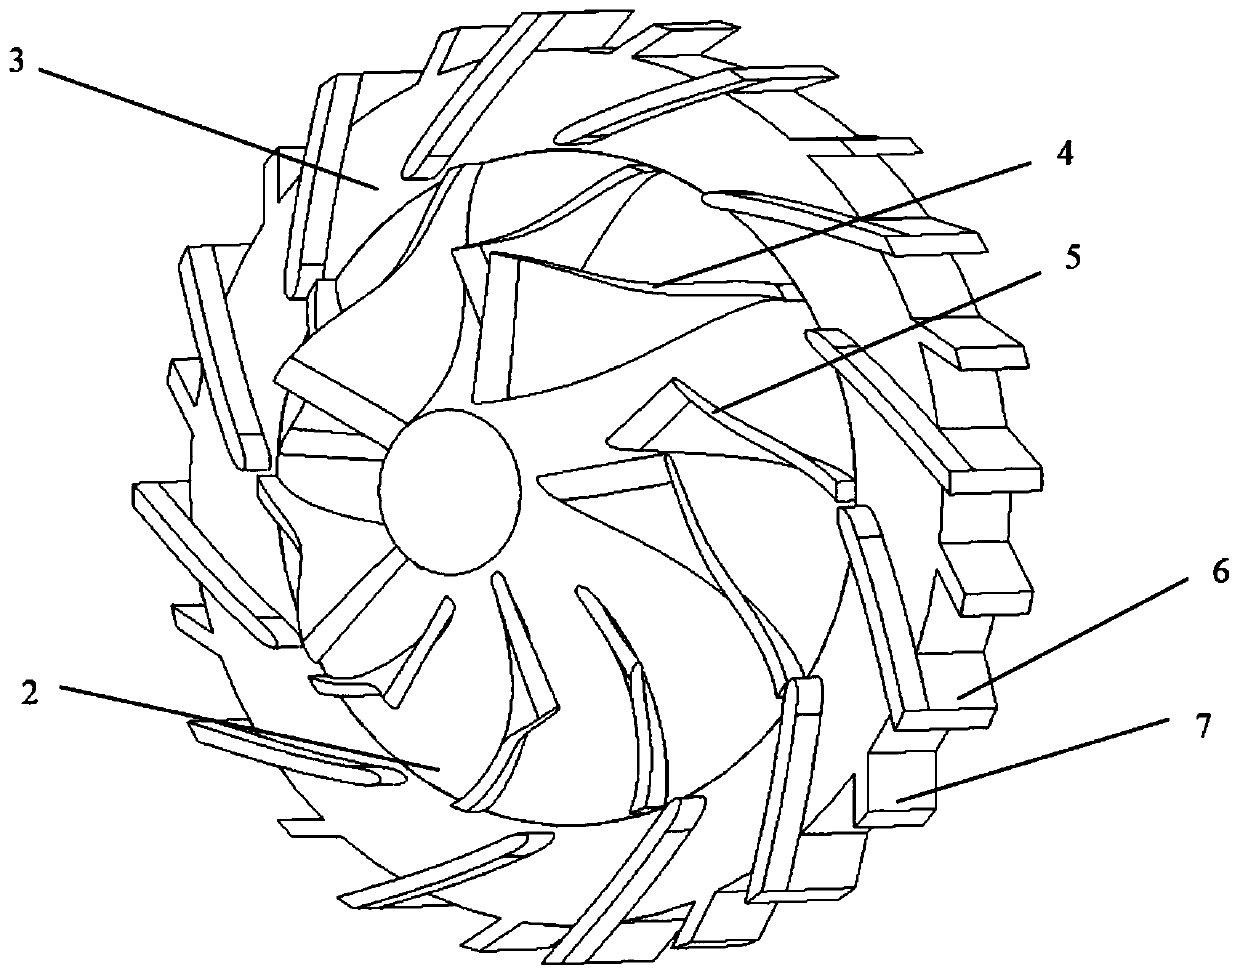 Design method of centrifugal compressor and diffuser structure